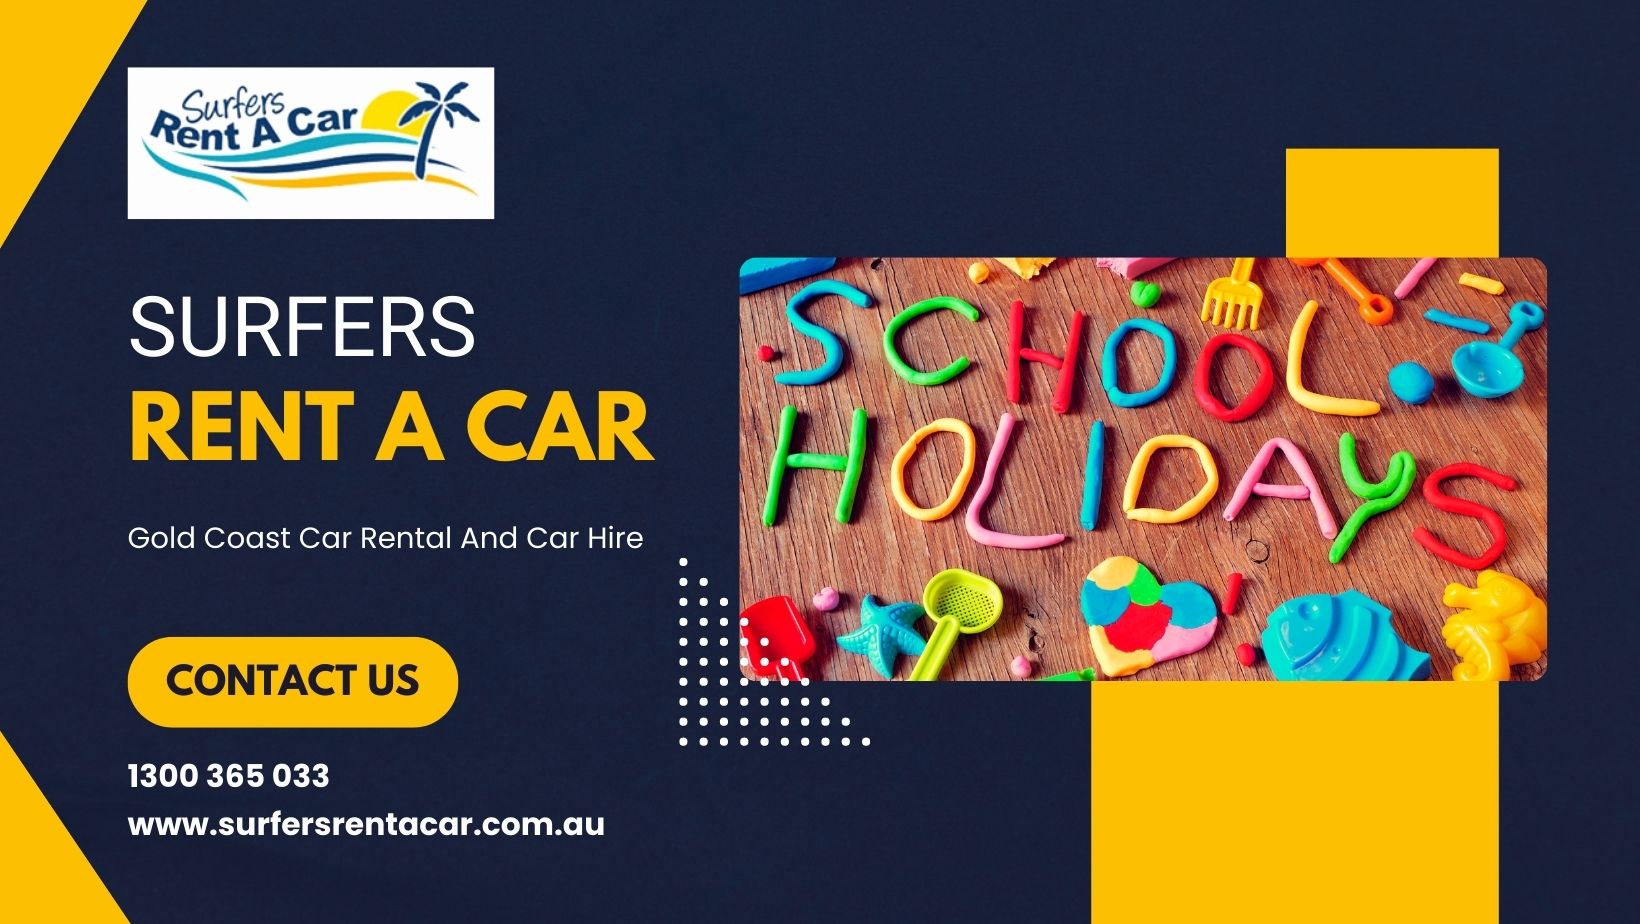 Plan your Next School Holidays - Gold Coast